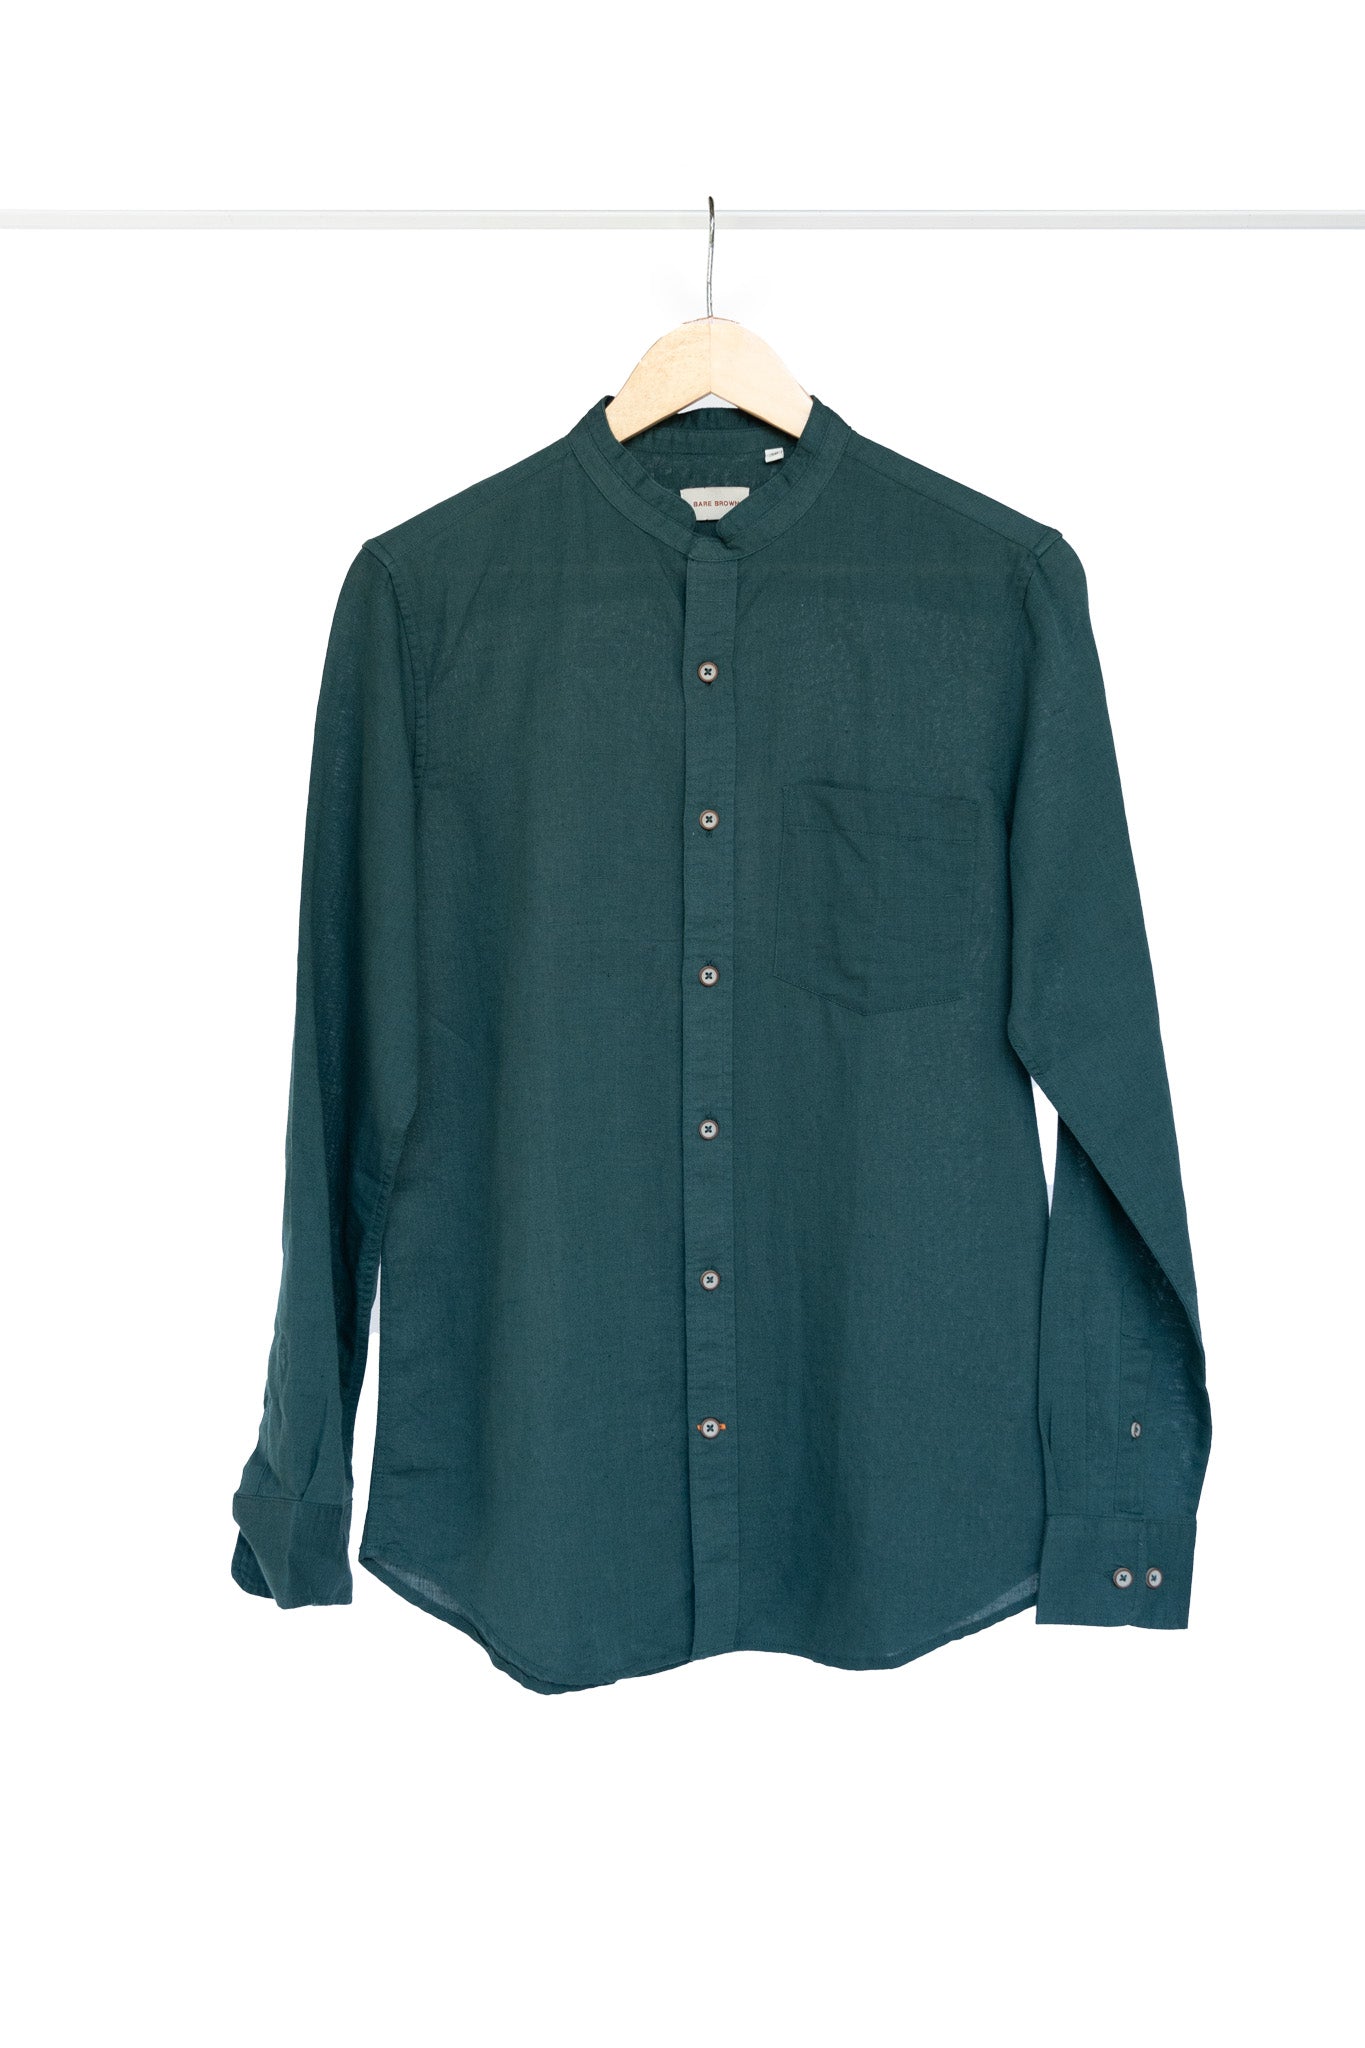 Bare Brown Mandarin Collar Cotton Linen Shirt, Slim Fit with Full Sleeves - Dark Green